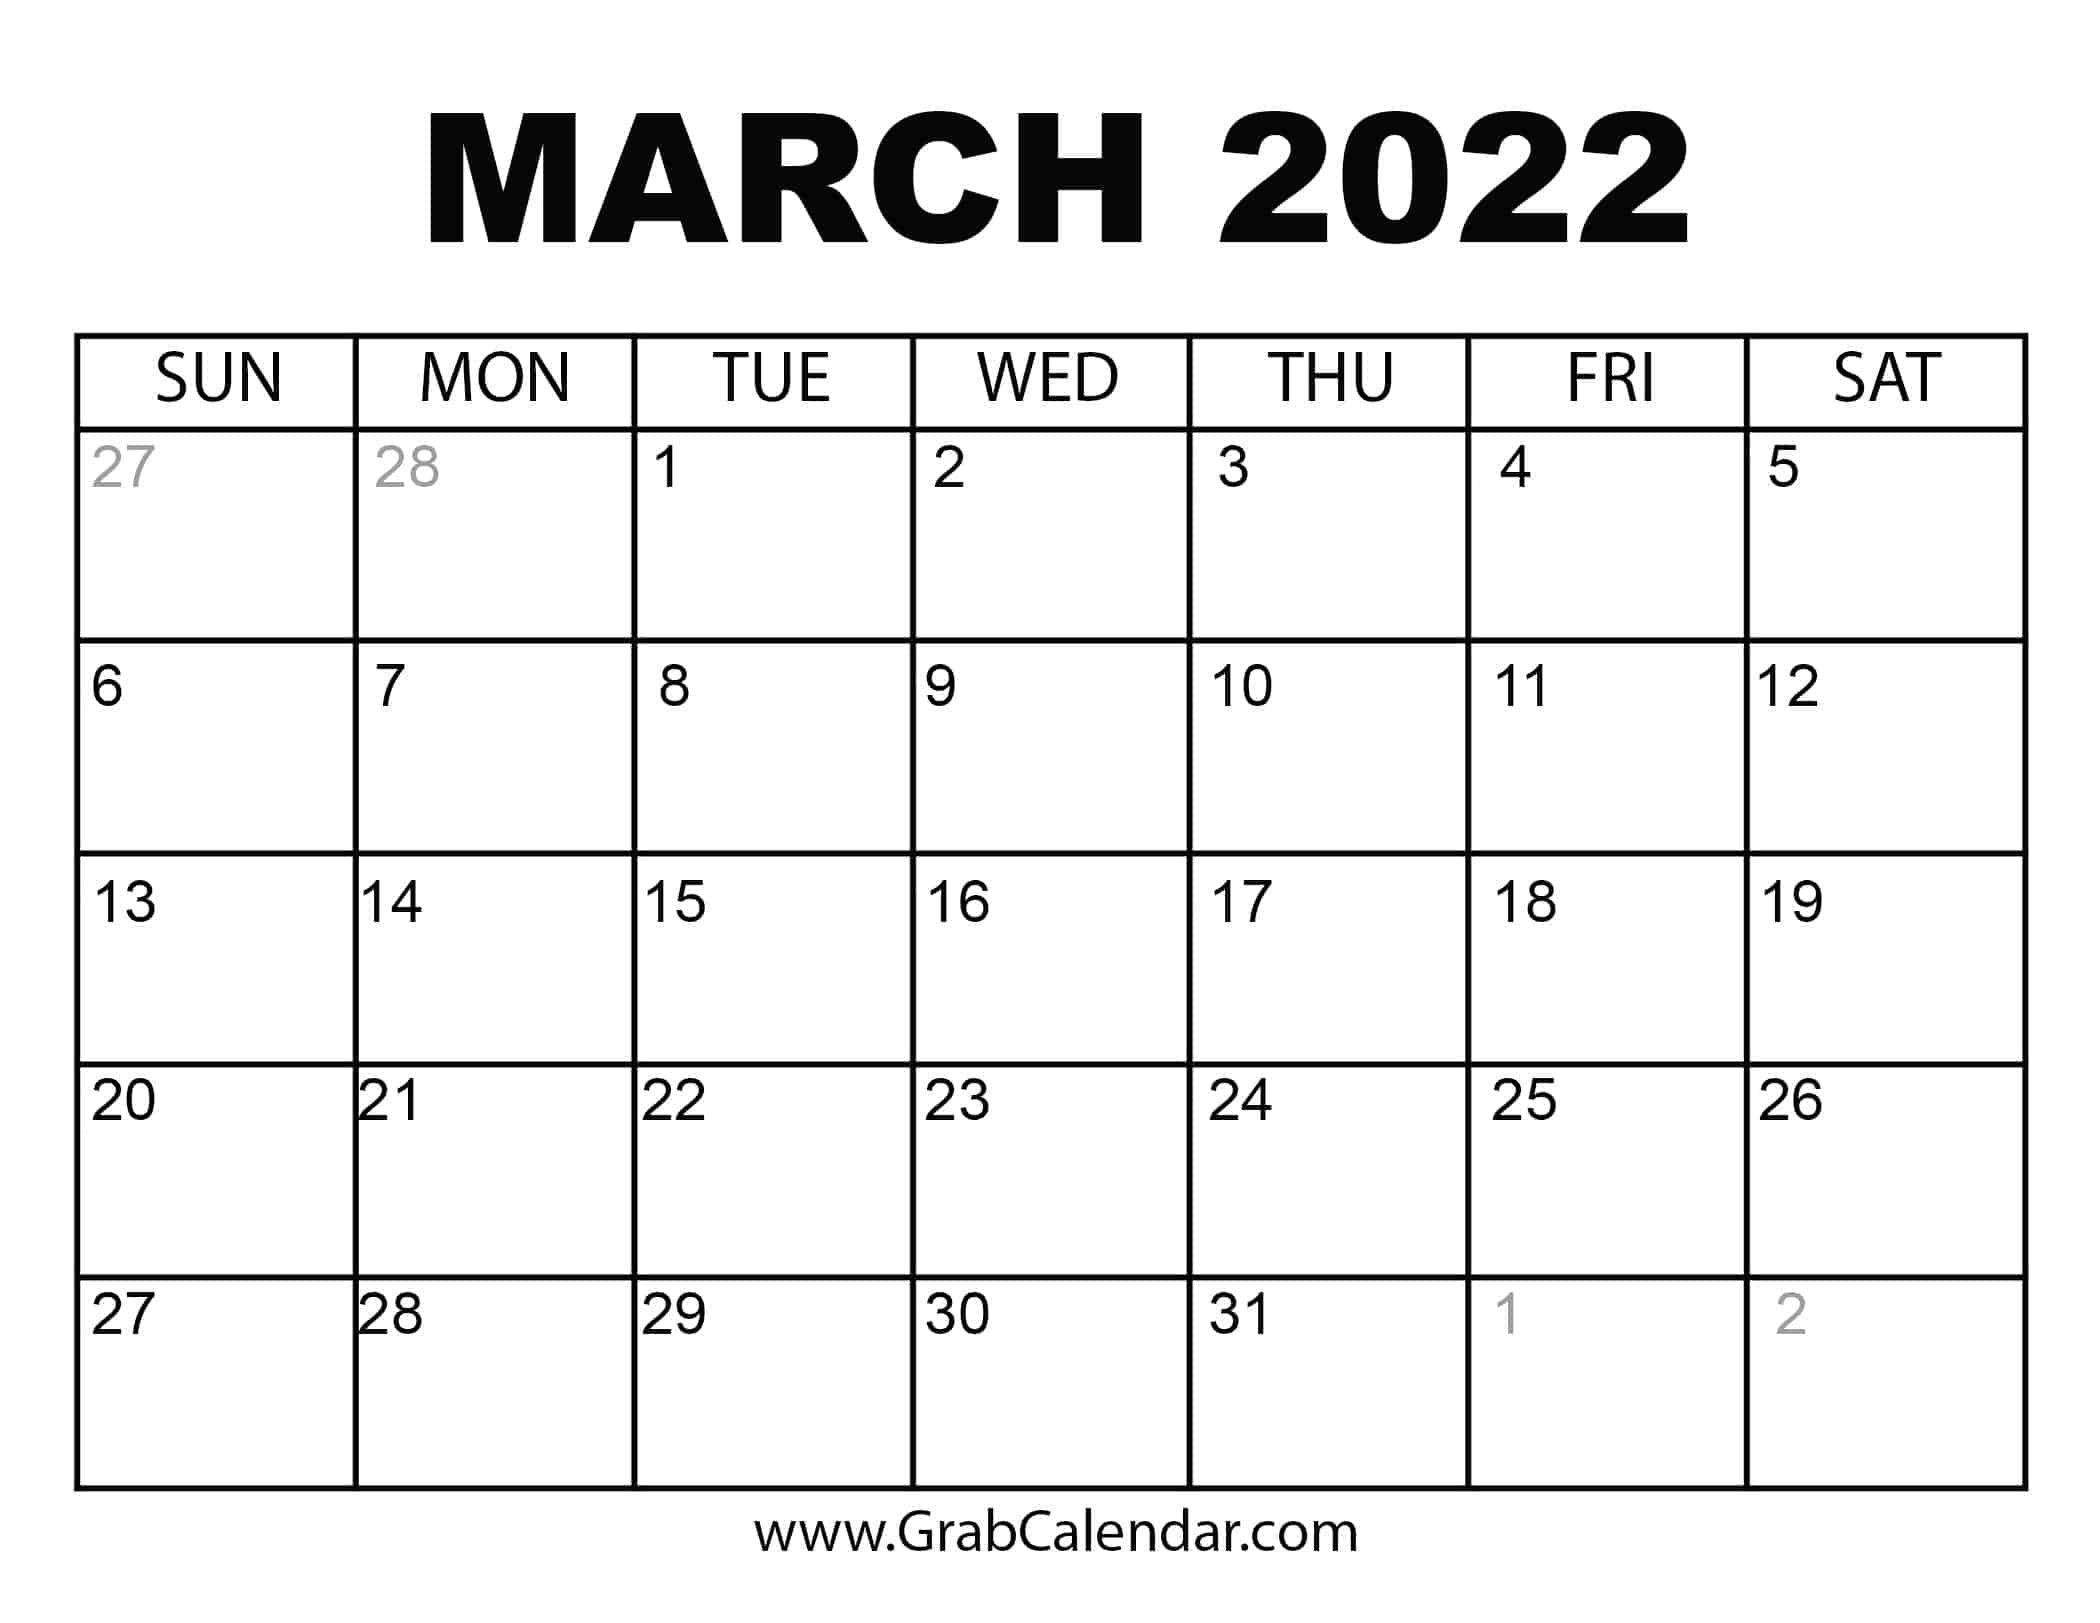 Mar 2022 Calendar Printable March 2022 Calendar